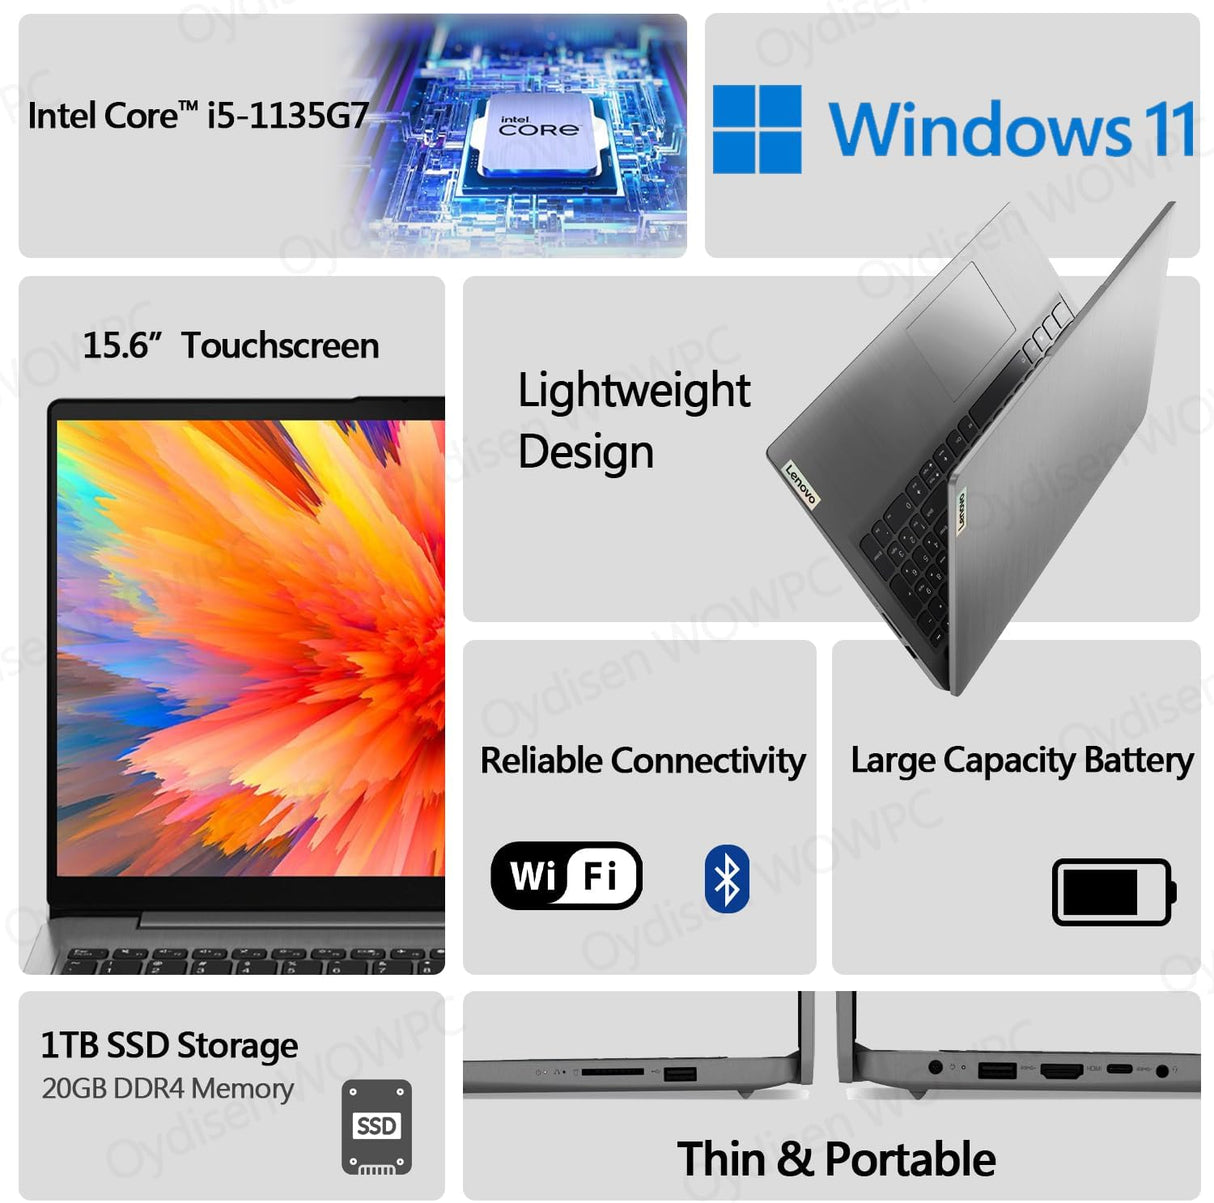 Laptop Lenovo con pantalla táctil de 15,6", procesador Intel Core i5-1135G7, 20 GB de RAM, 1 TB SSD, IdeaPad 3, pantalla FHD de 15,6 pulgadas, Wi-Fi 6 y Bluetooth 5, batería de larga duración, Windows 11, 1 año de Microsoft 365